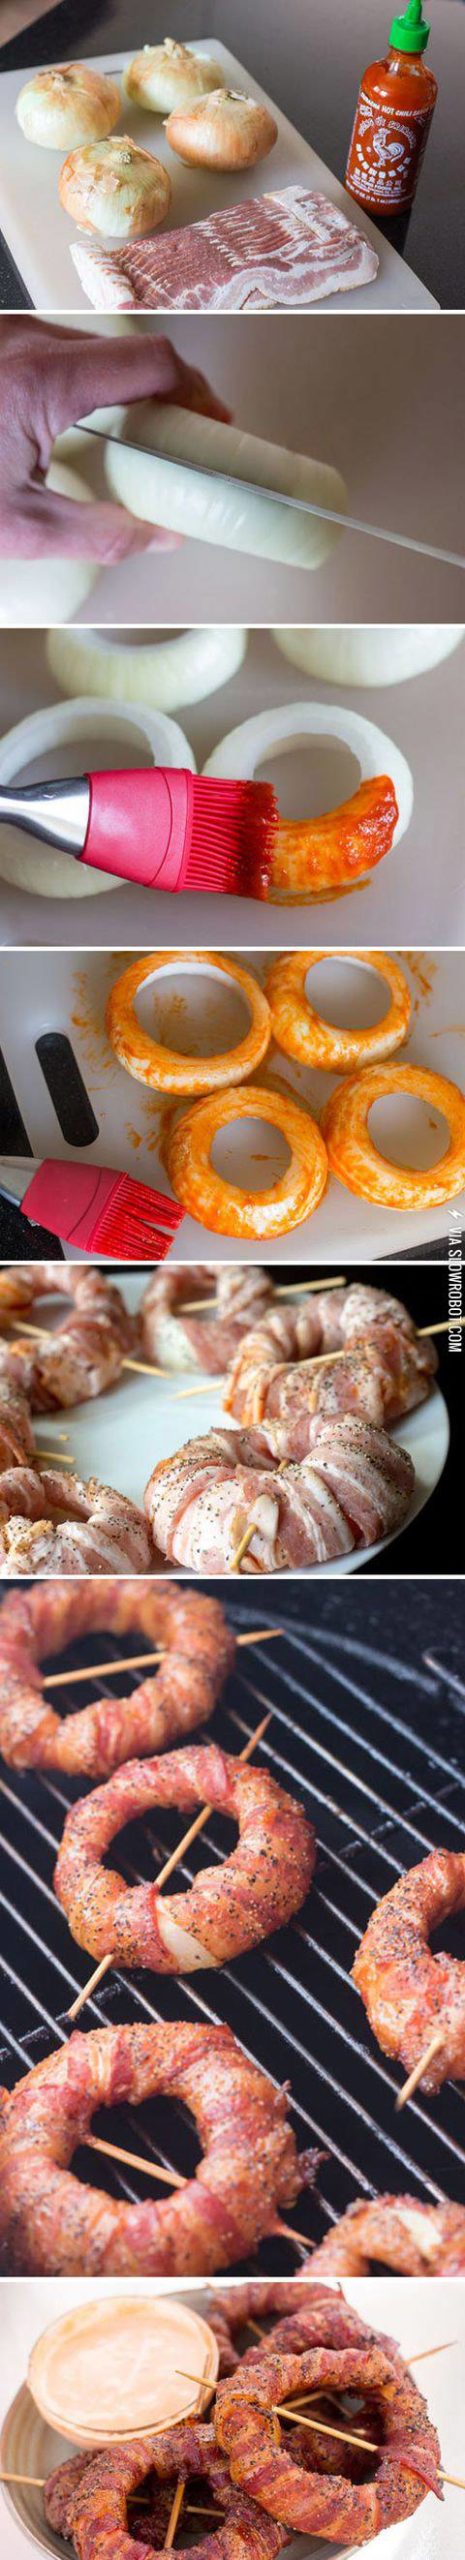 Bacon+onion+rings%21